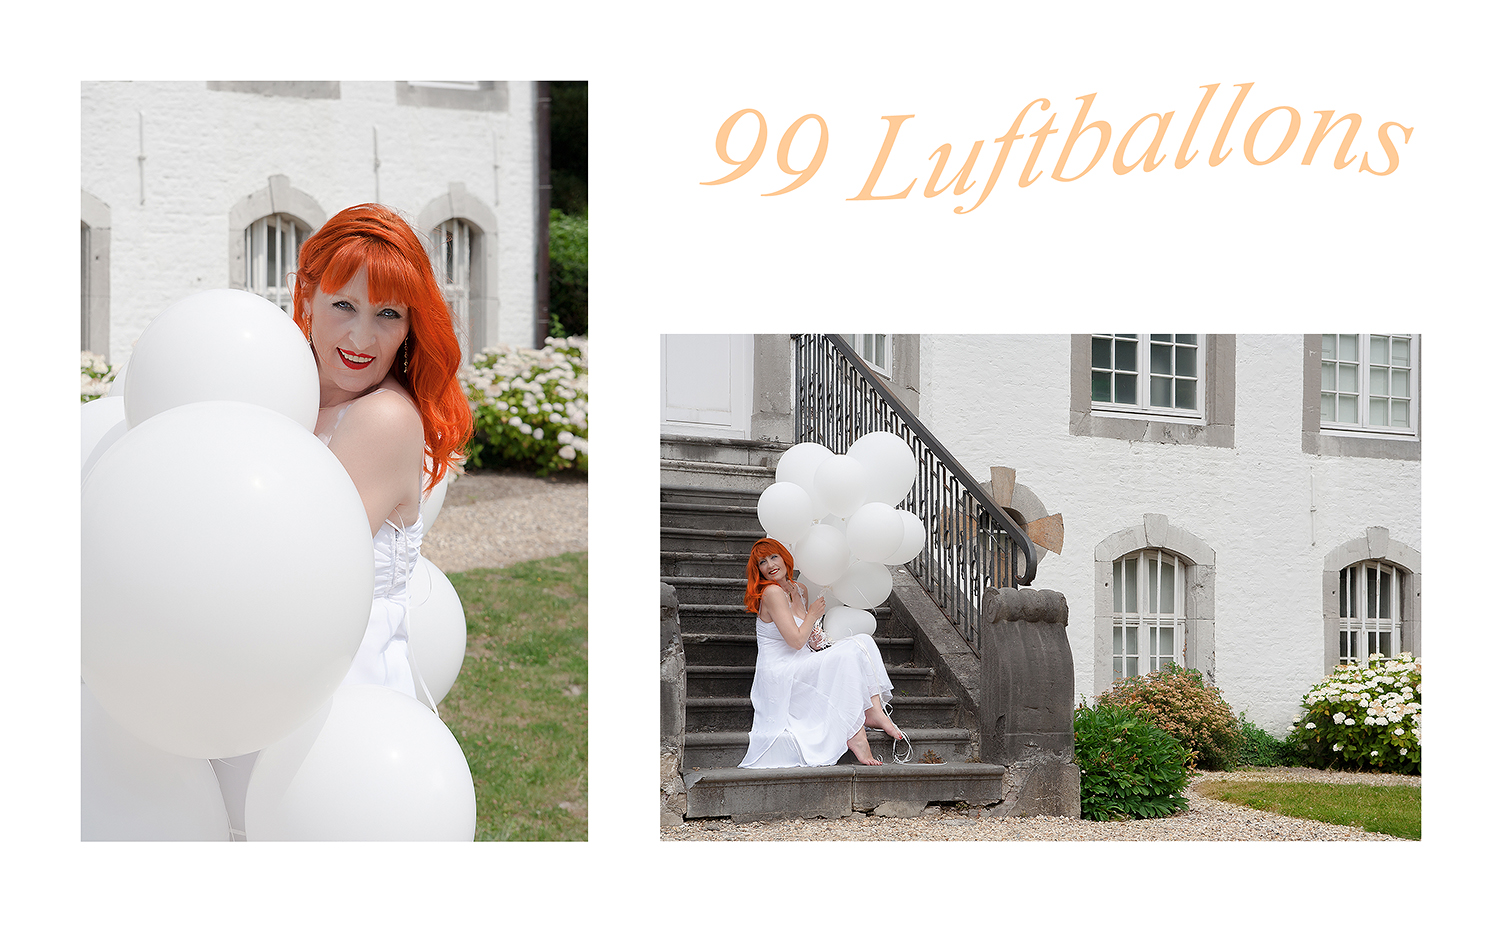 99 Luftballons ....